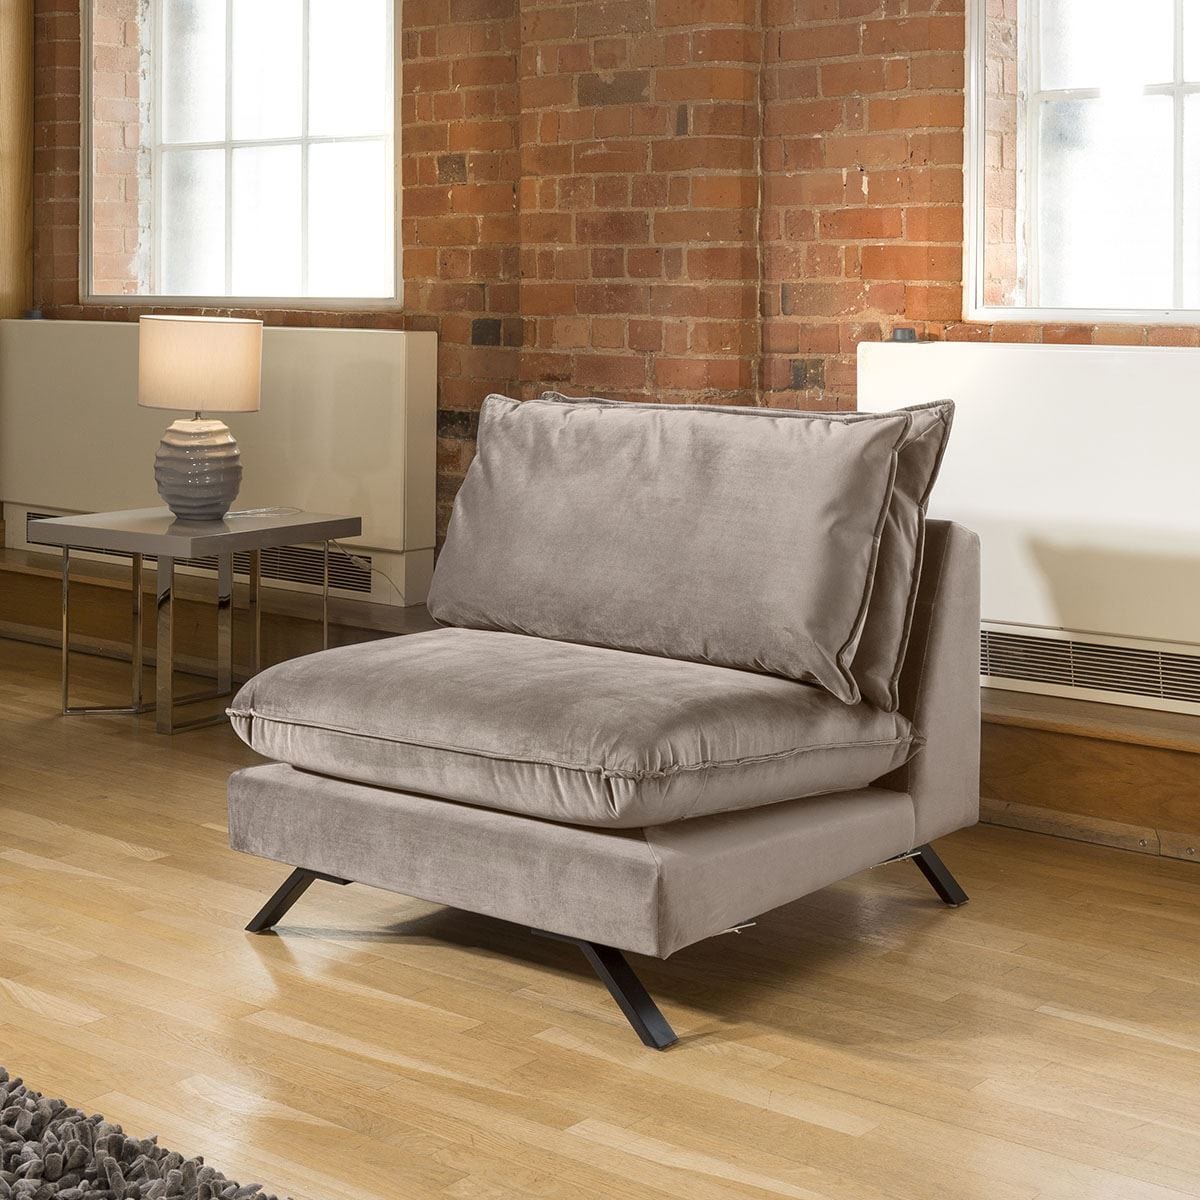 Quatropi Ellie Range Modular Sofa Extra Middle Section / Piece 900mm wide